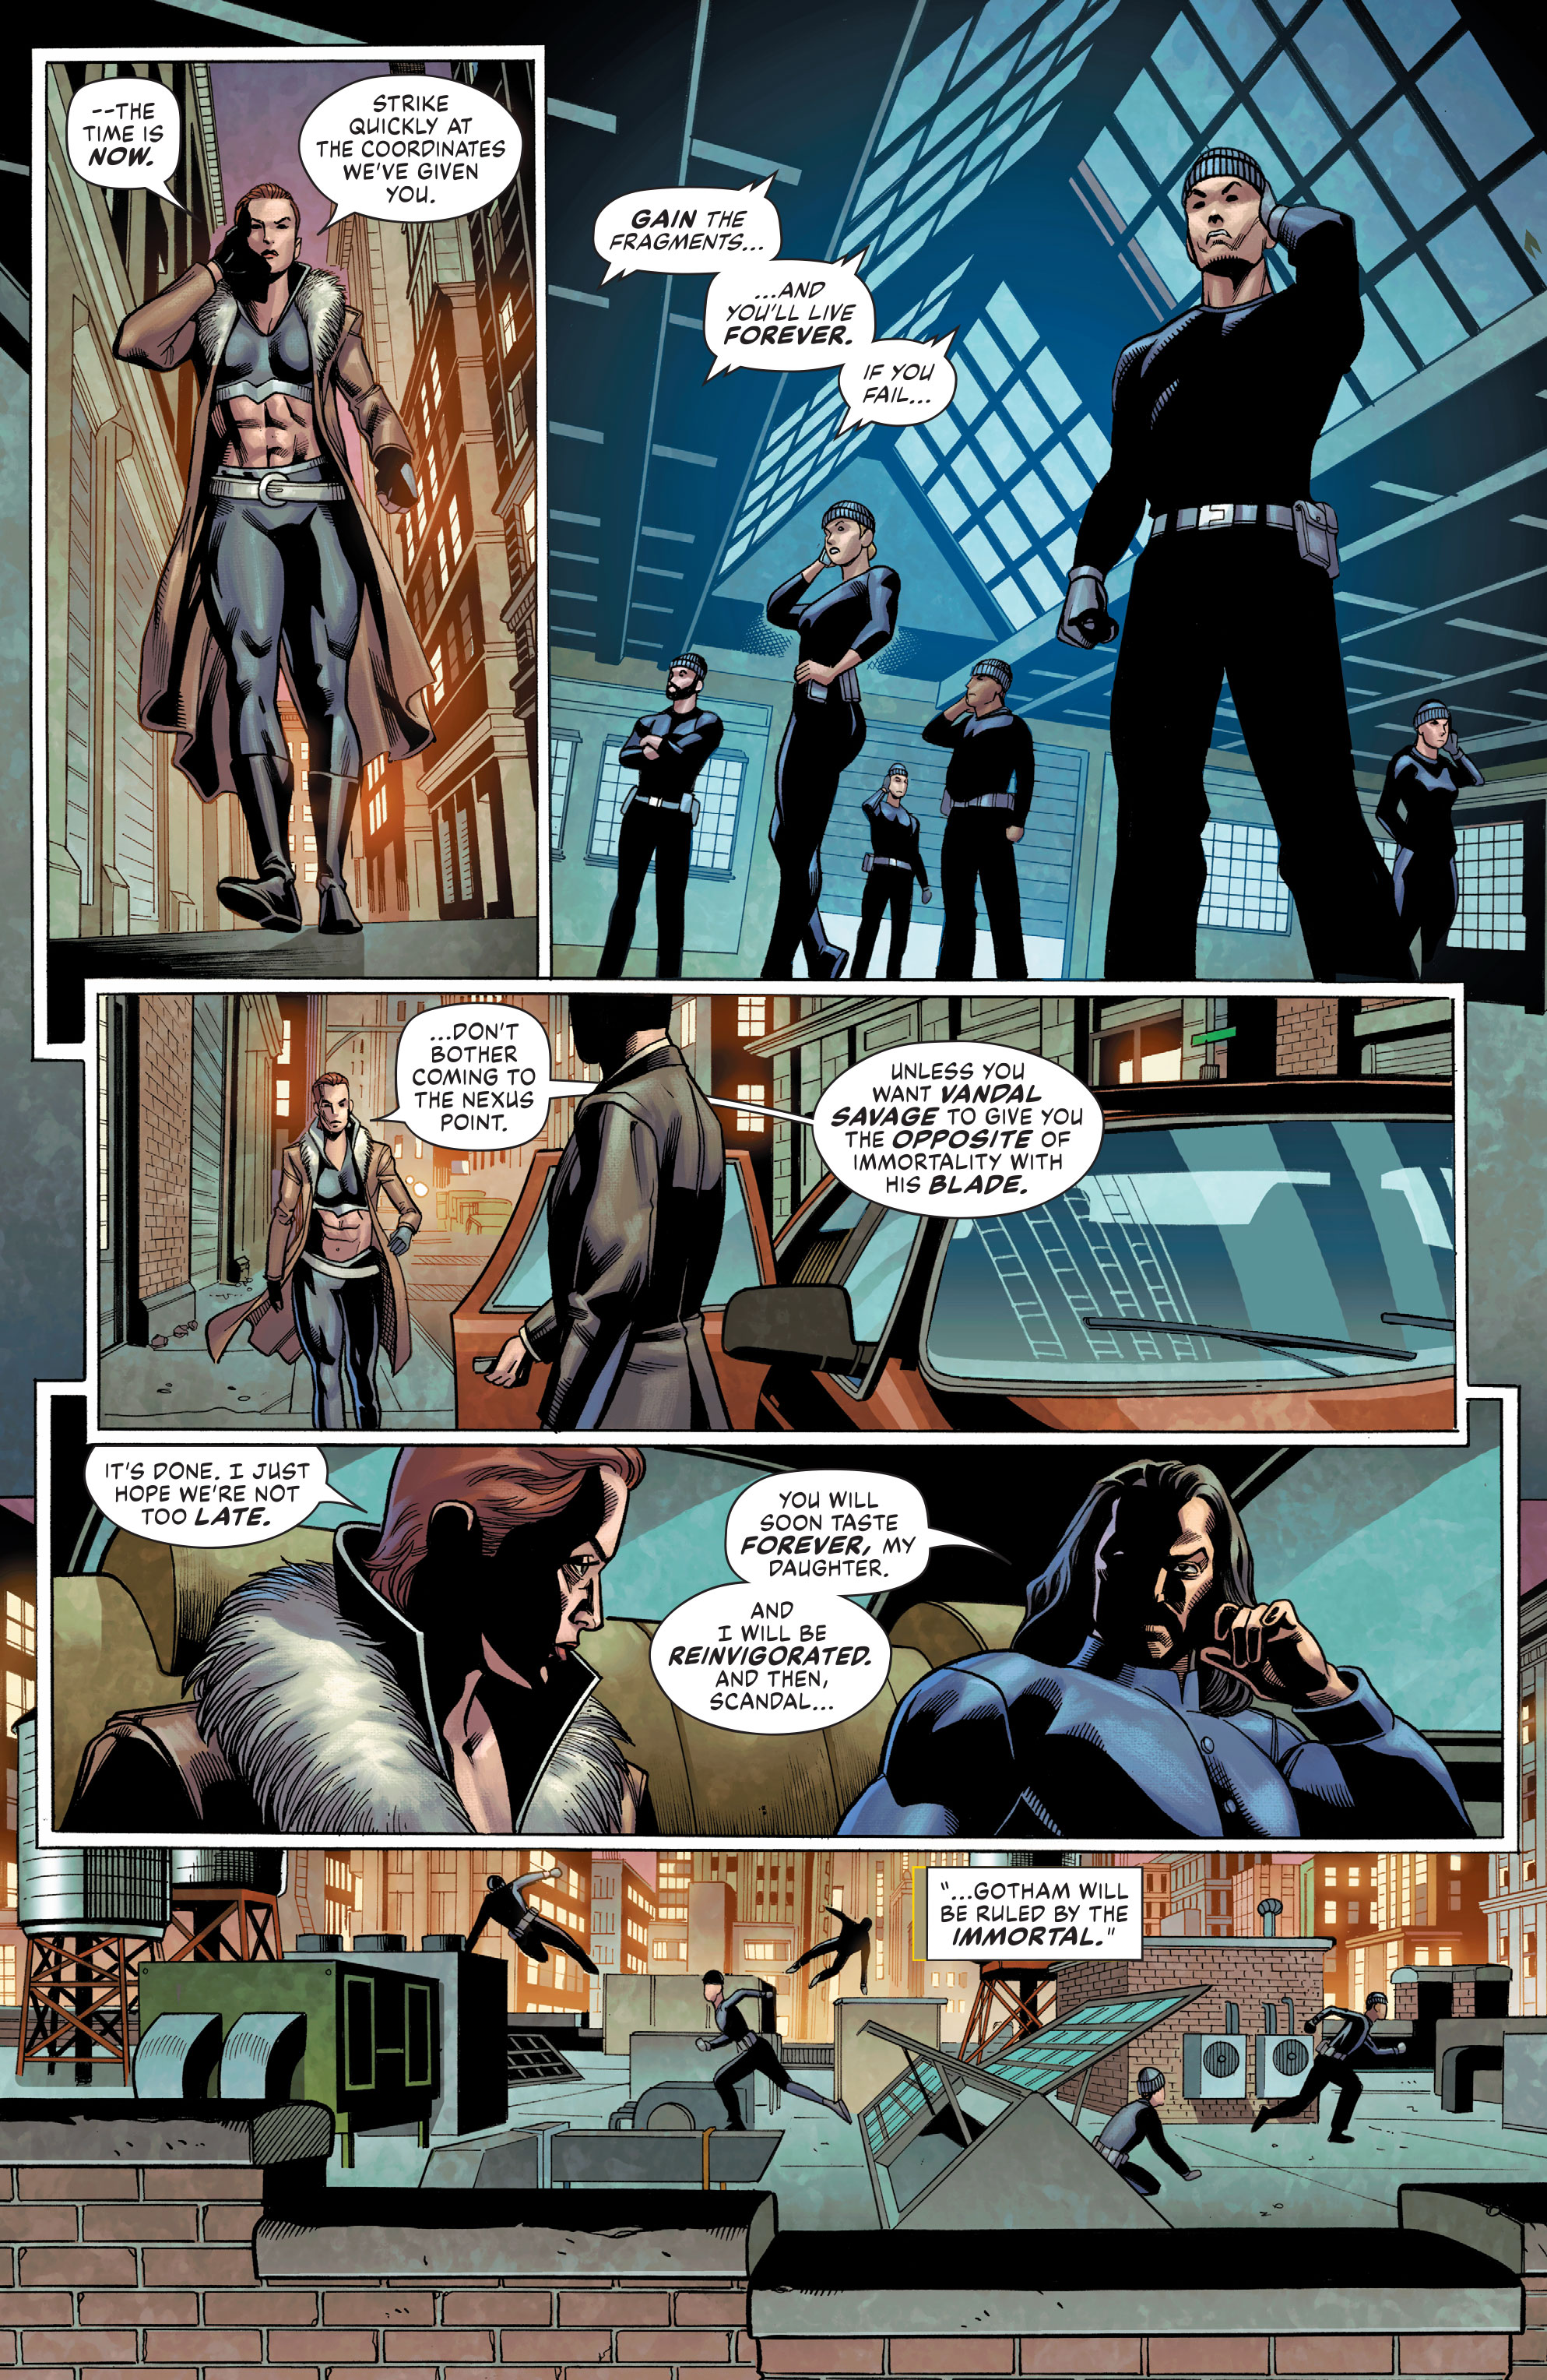 Arte da Batman/Catwoman: La guerra di Gotham: Terra bruciata #1